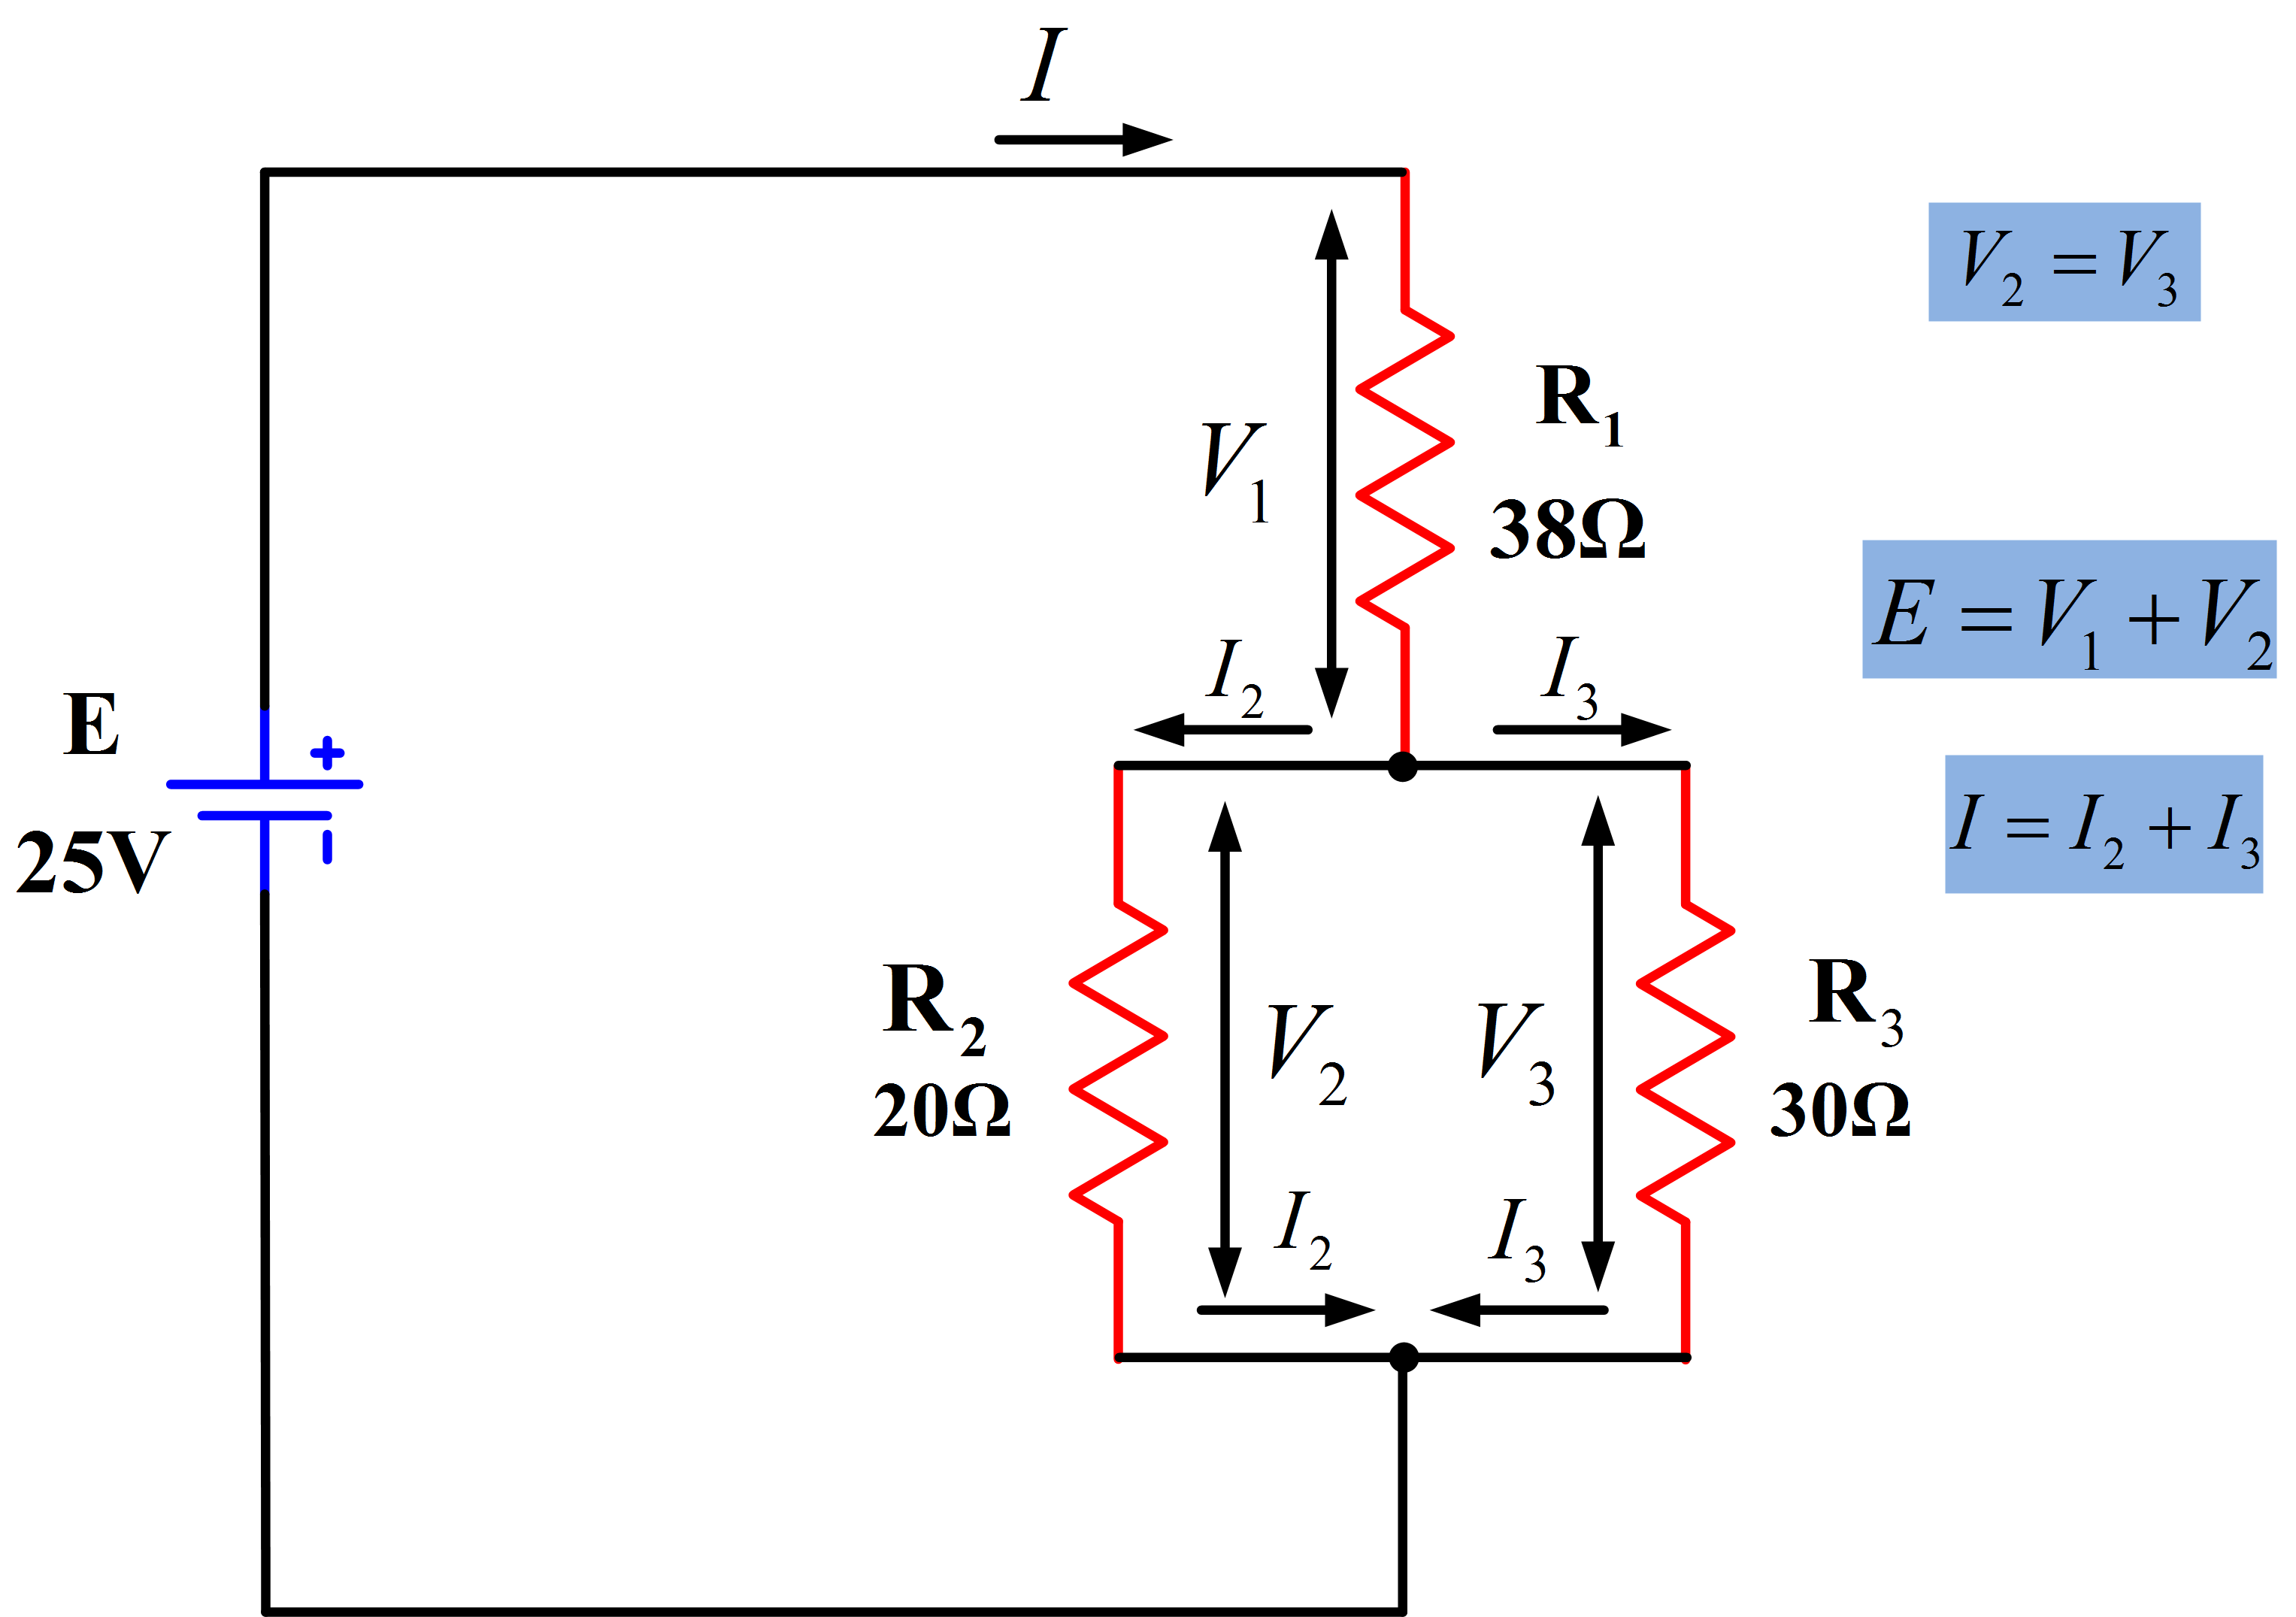 series vs parallel circuit